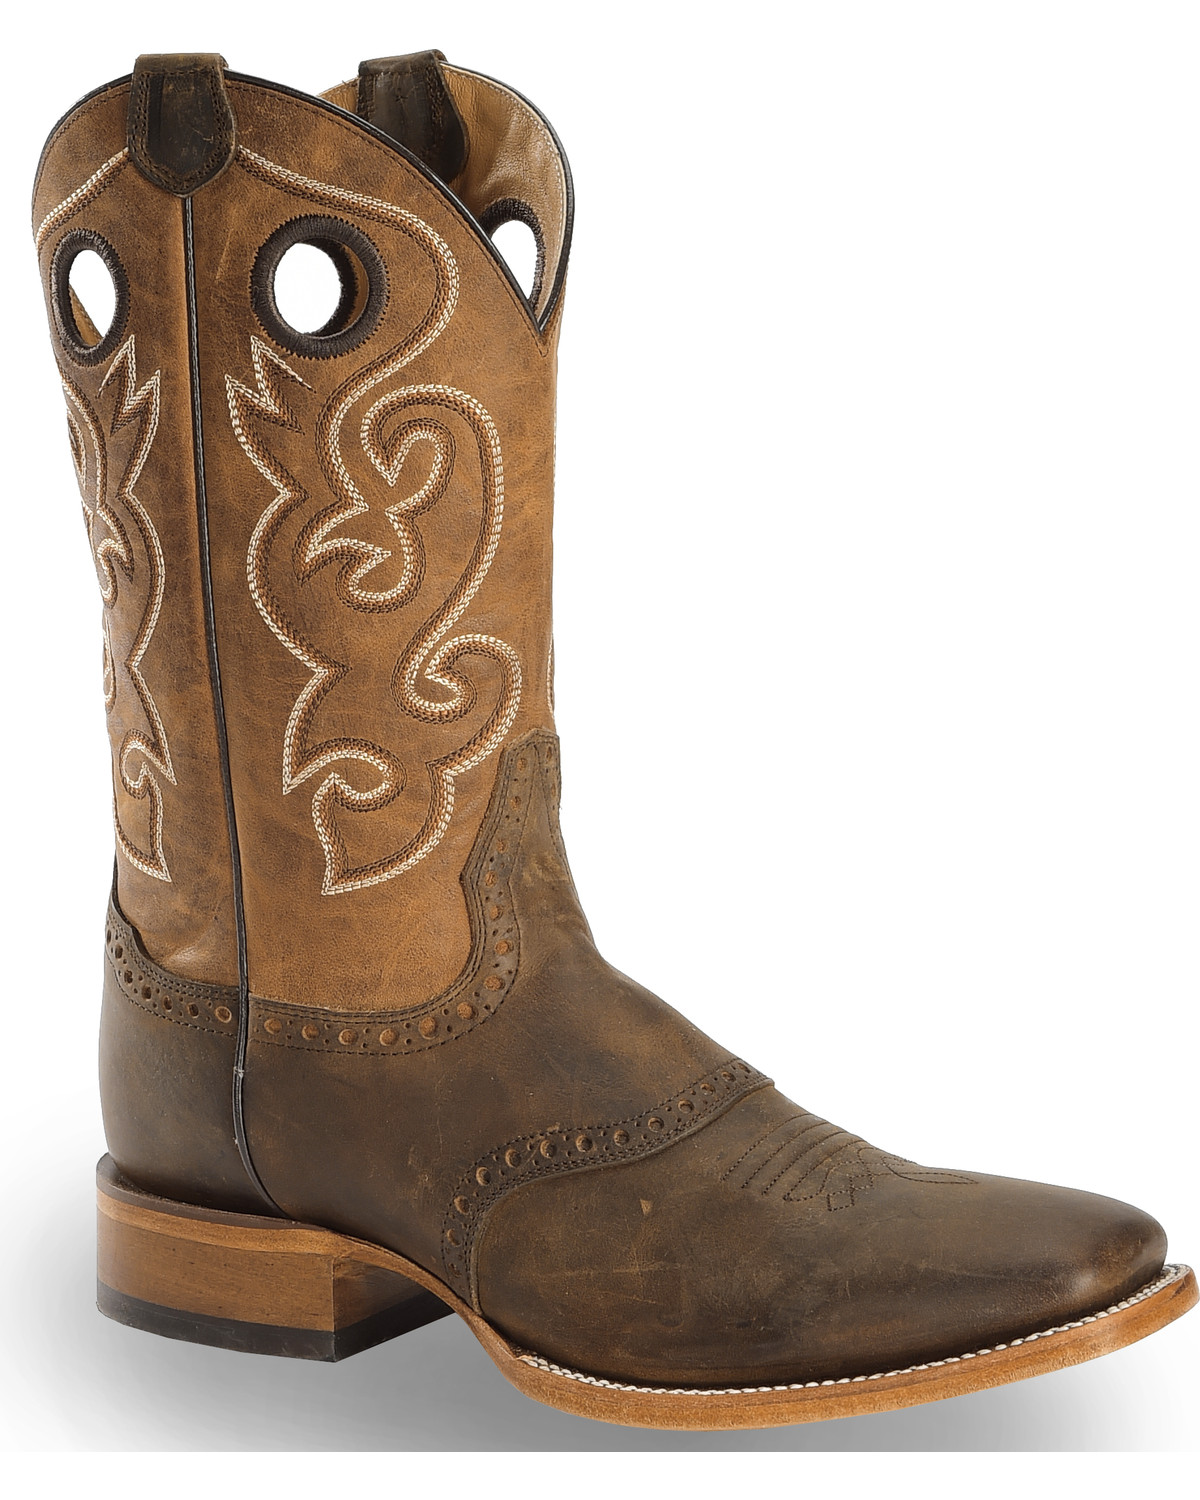 Cody James Men's Saddle Vamp Western Boots - Broad Square Toe